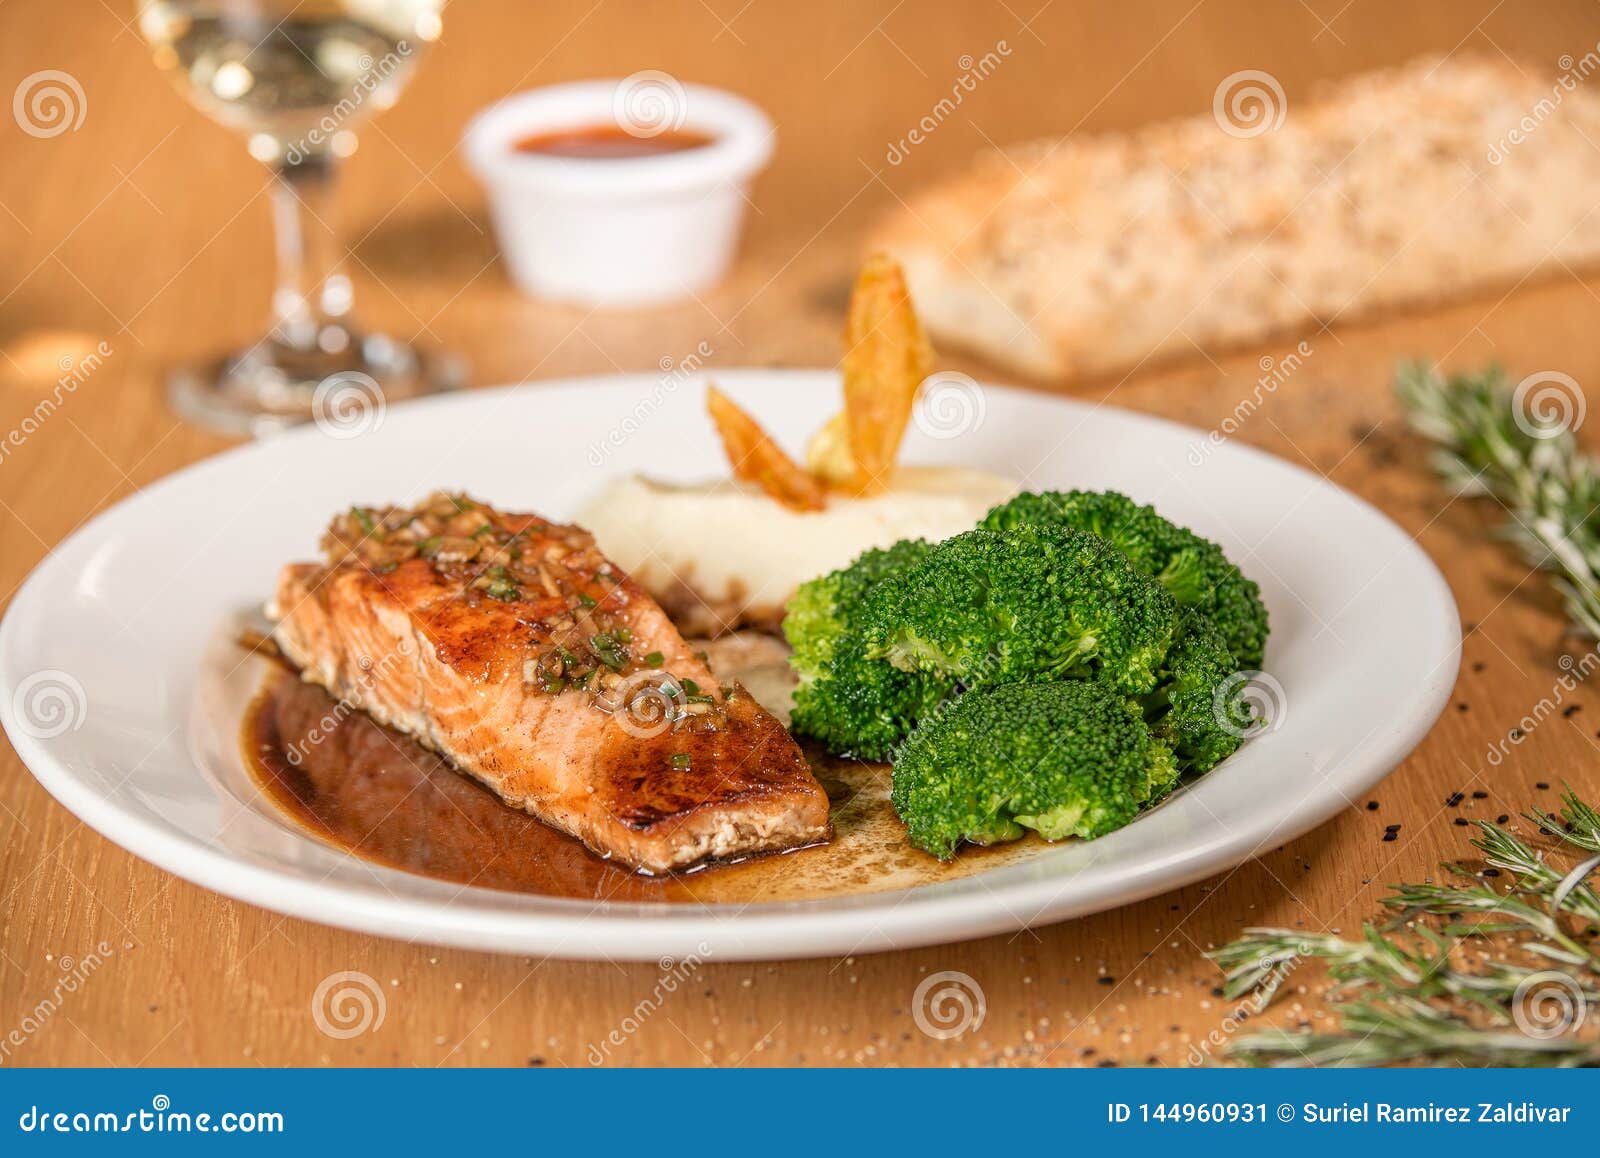 salmon dish with broccoli, fresh and healthy food